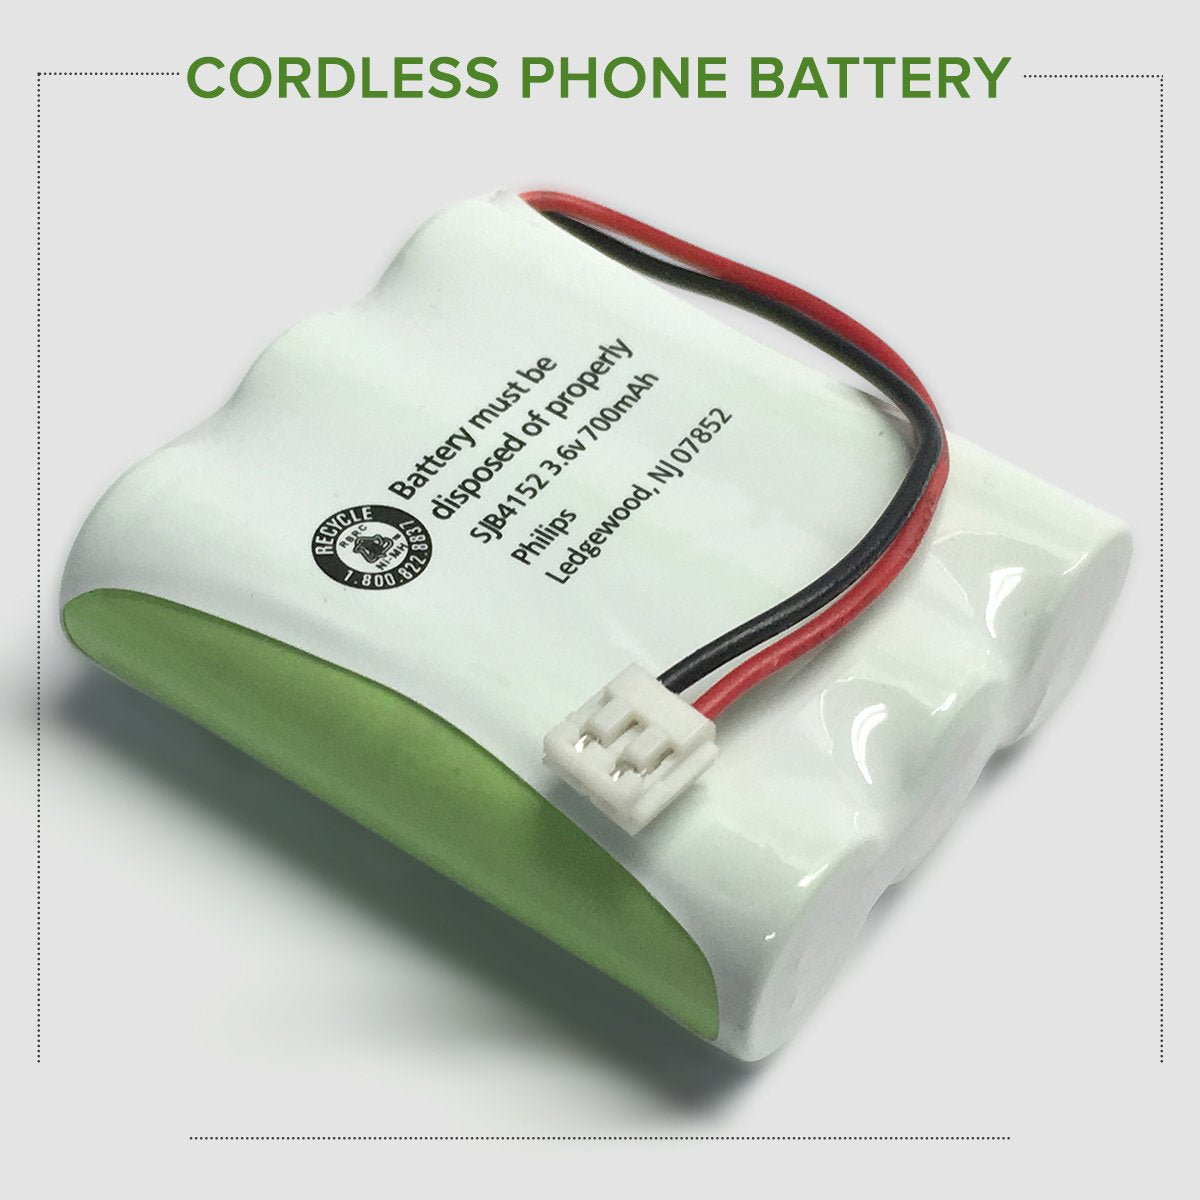 AT&T  2415 Cordless Phone Battery